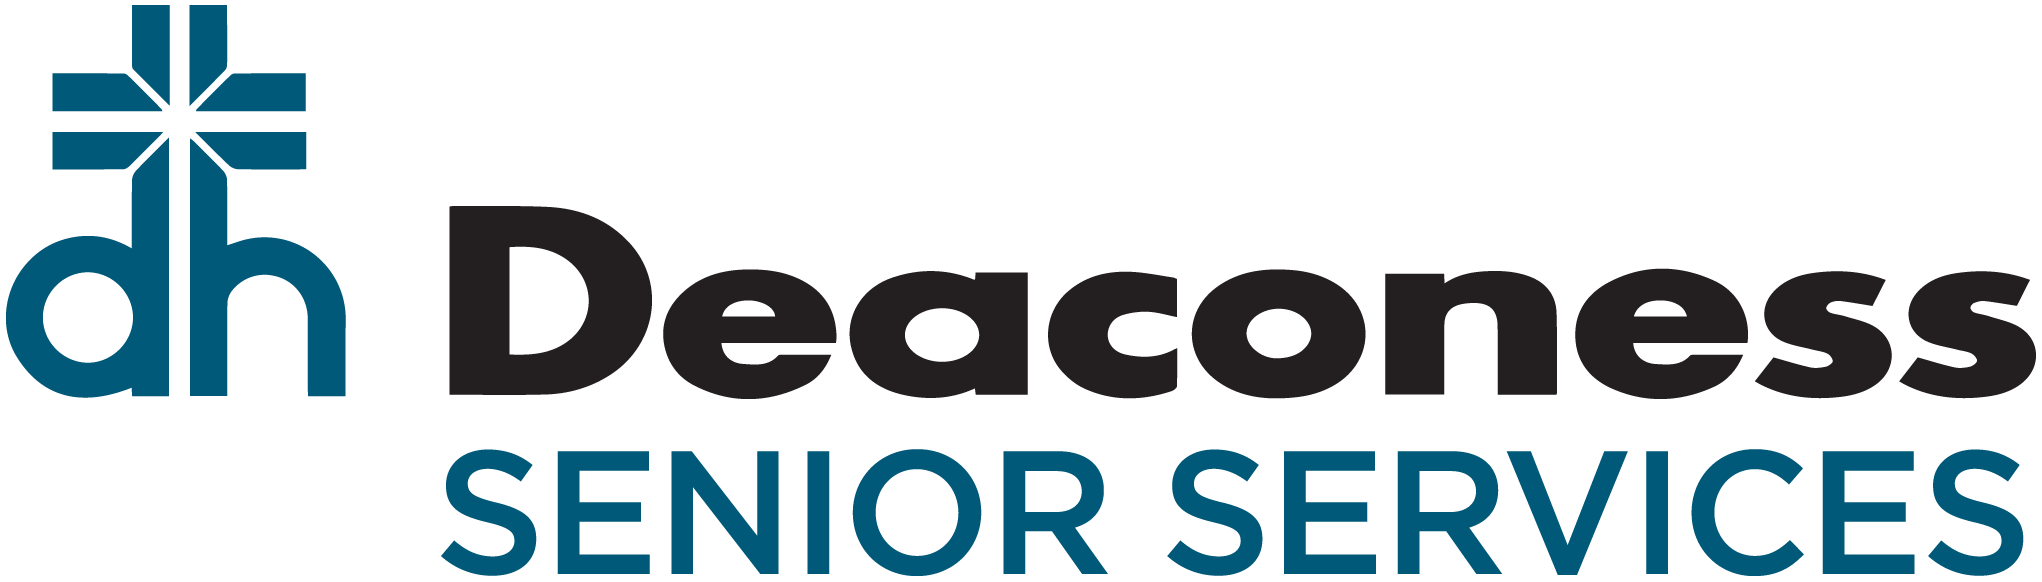 Deaconess Senior Services